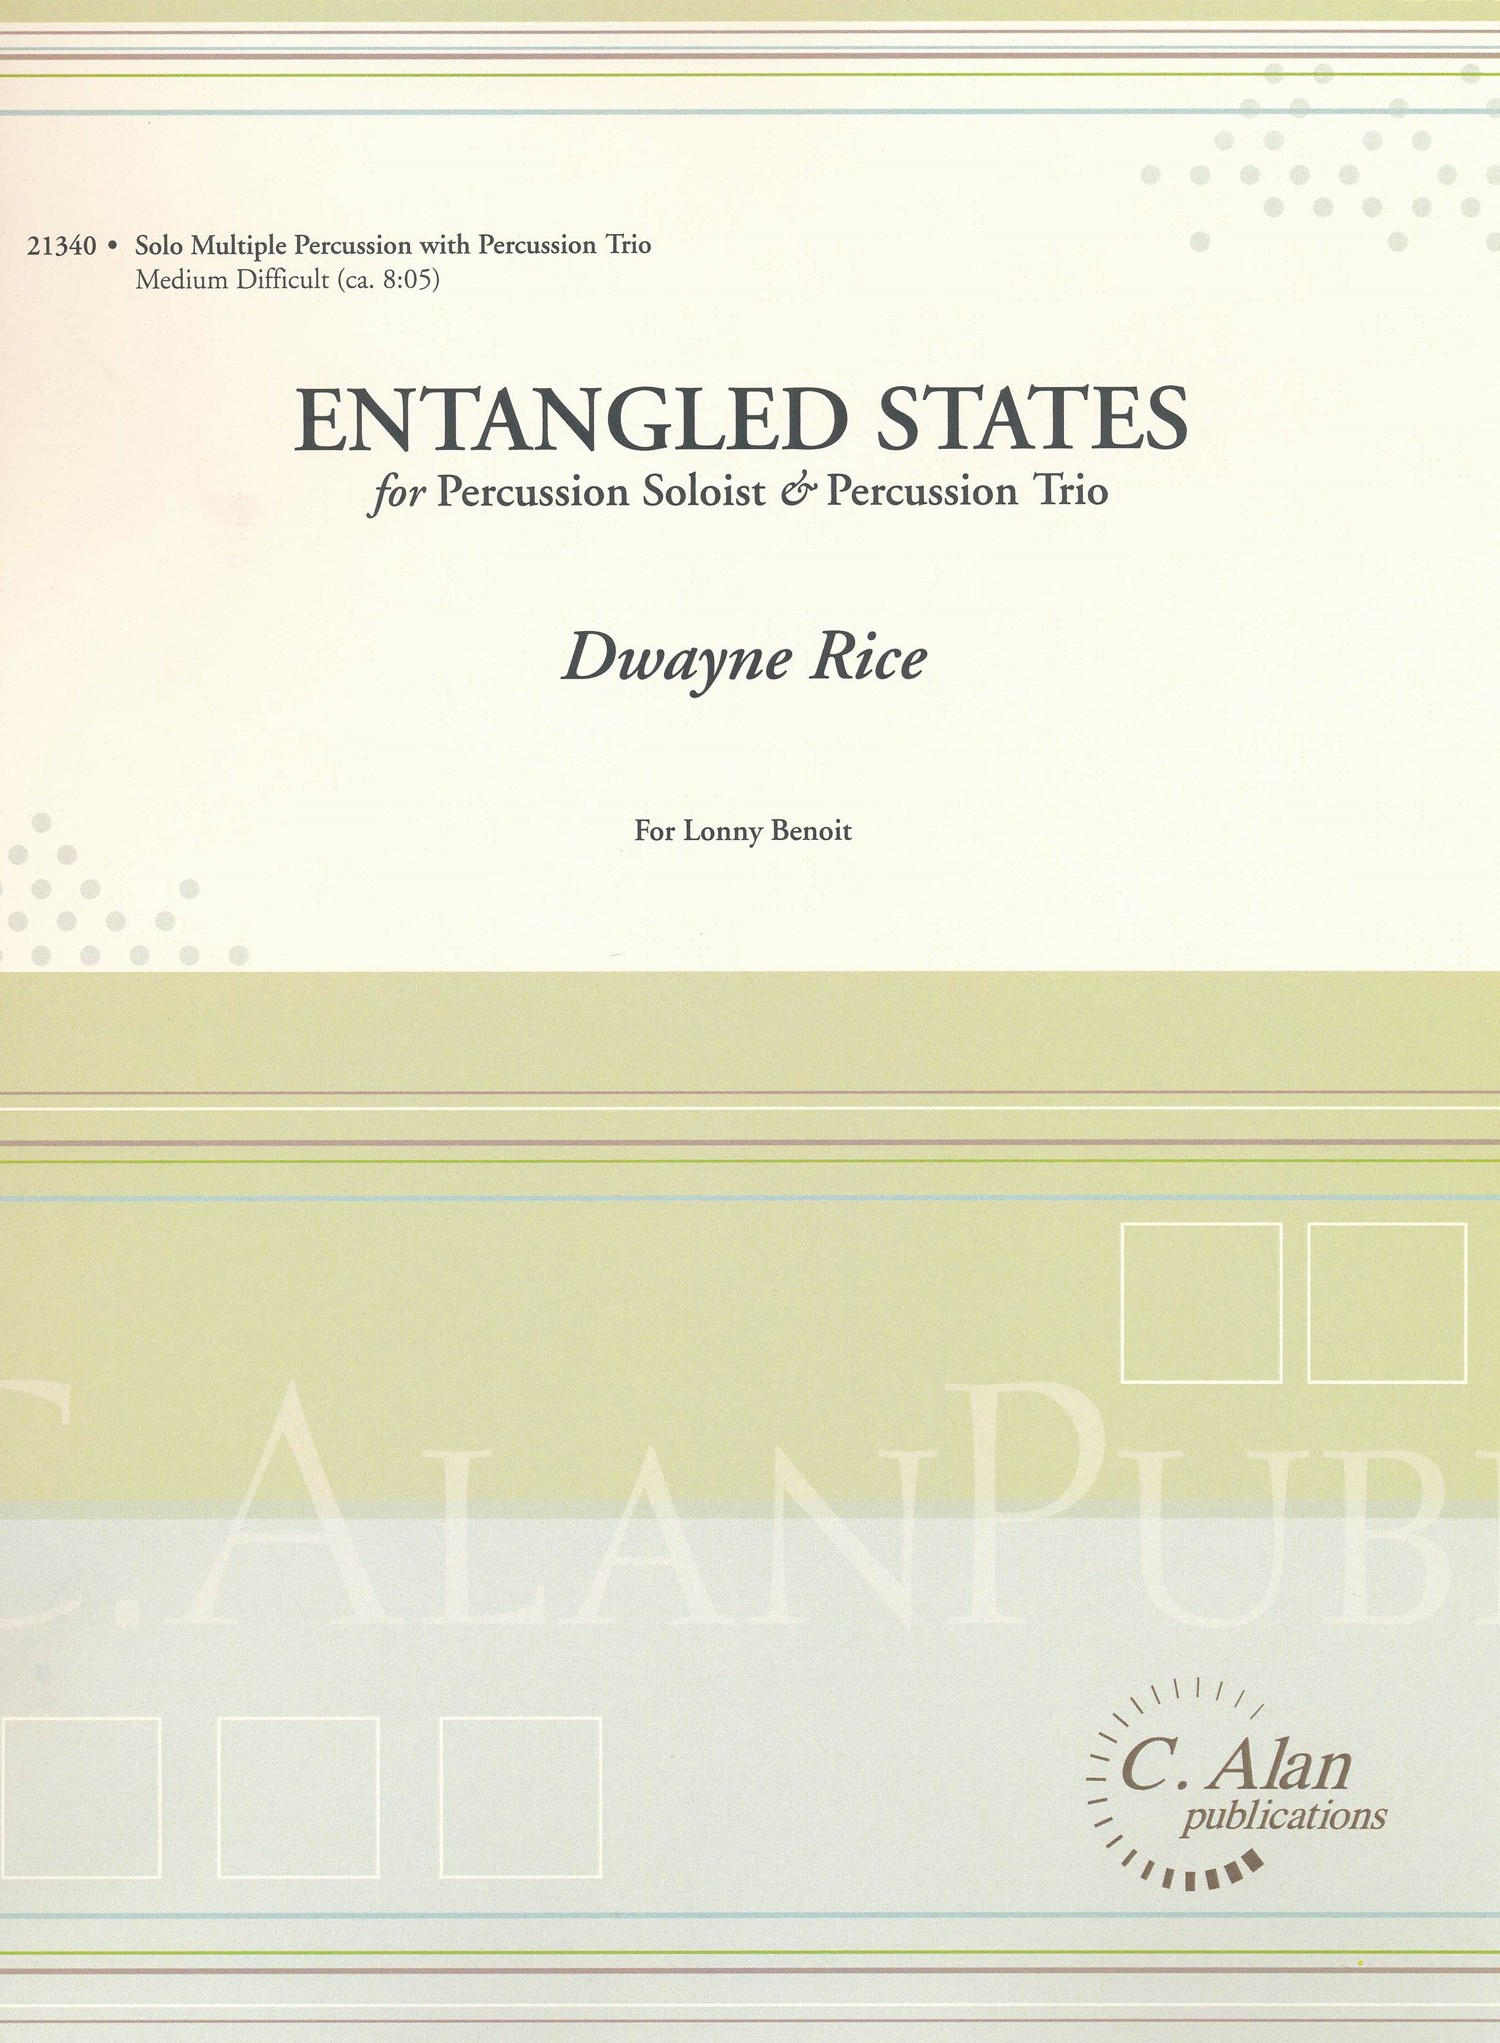 Entangled States by Dwayne Rice